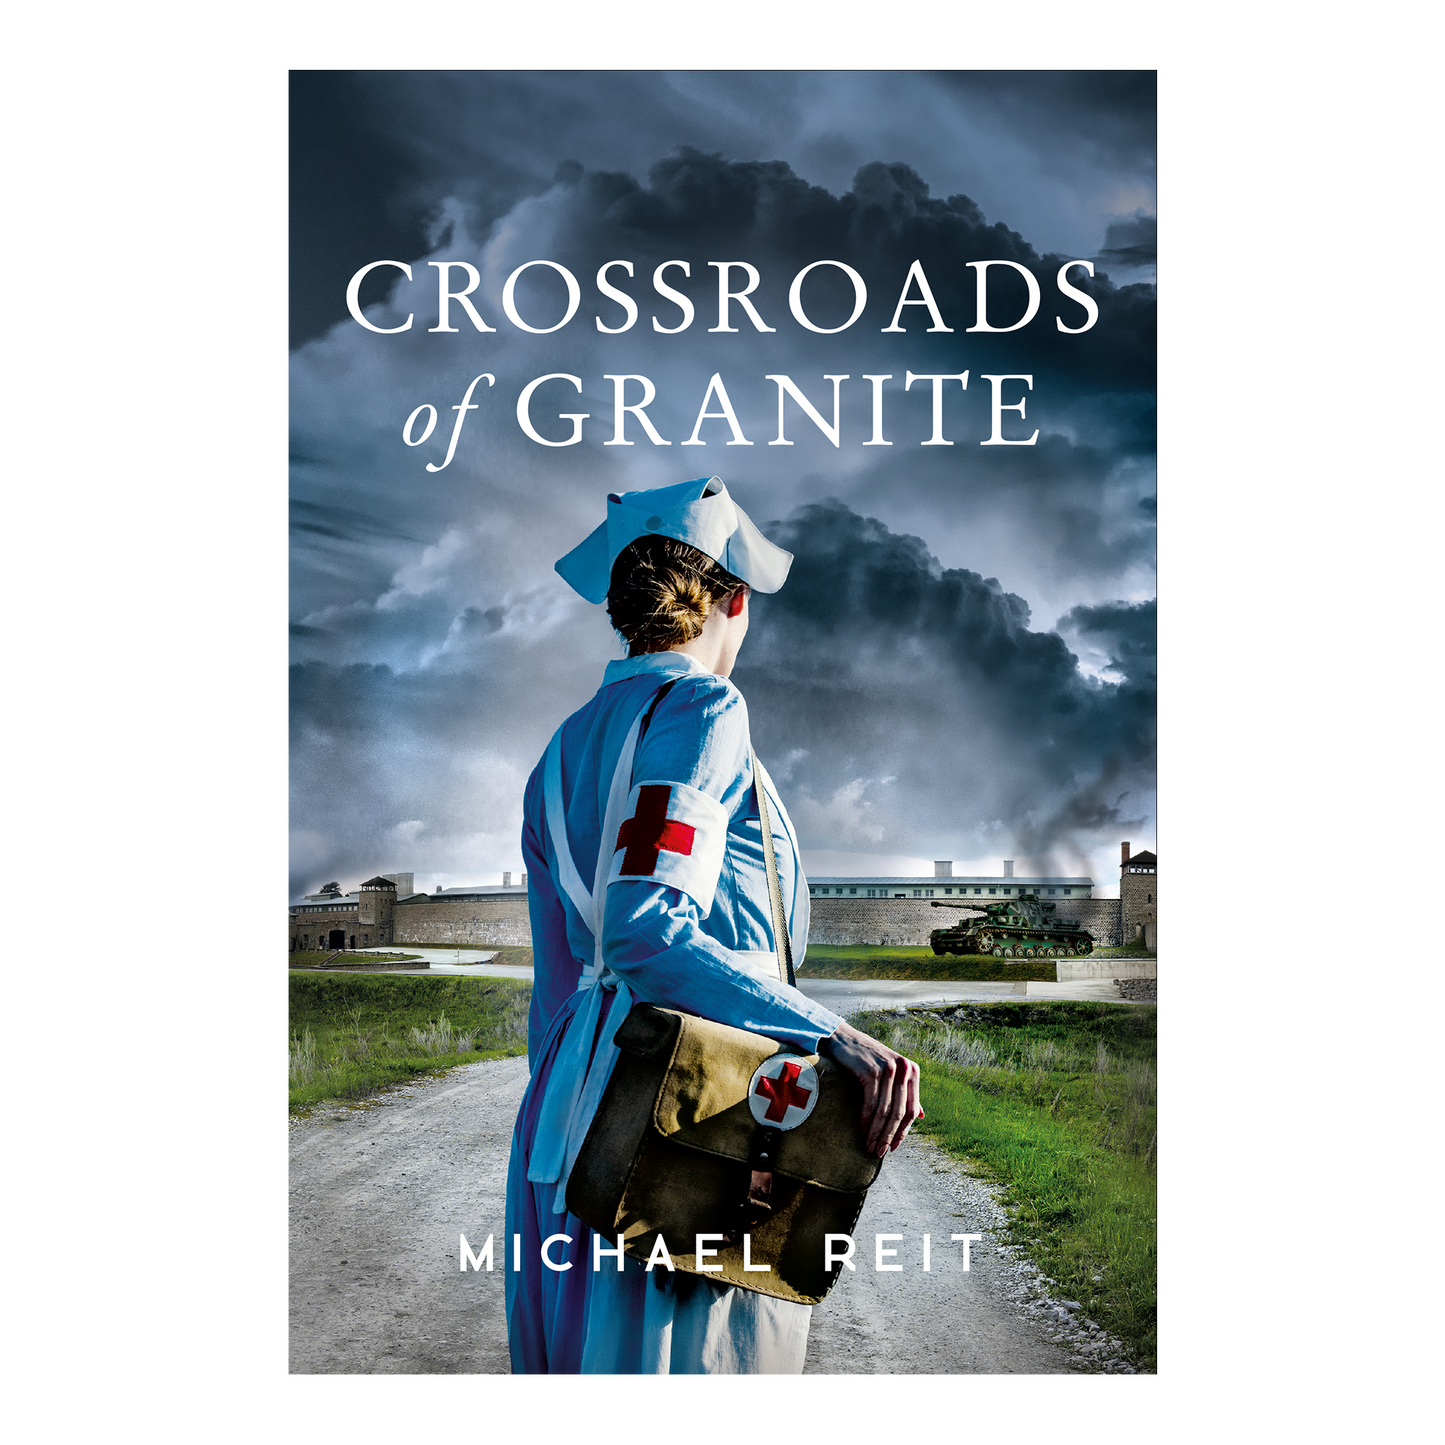 Crossroads of Granite, Ebook - Special UK Deal